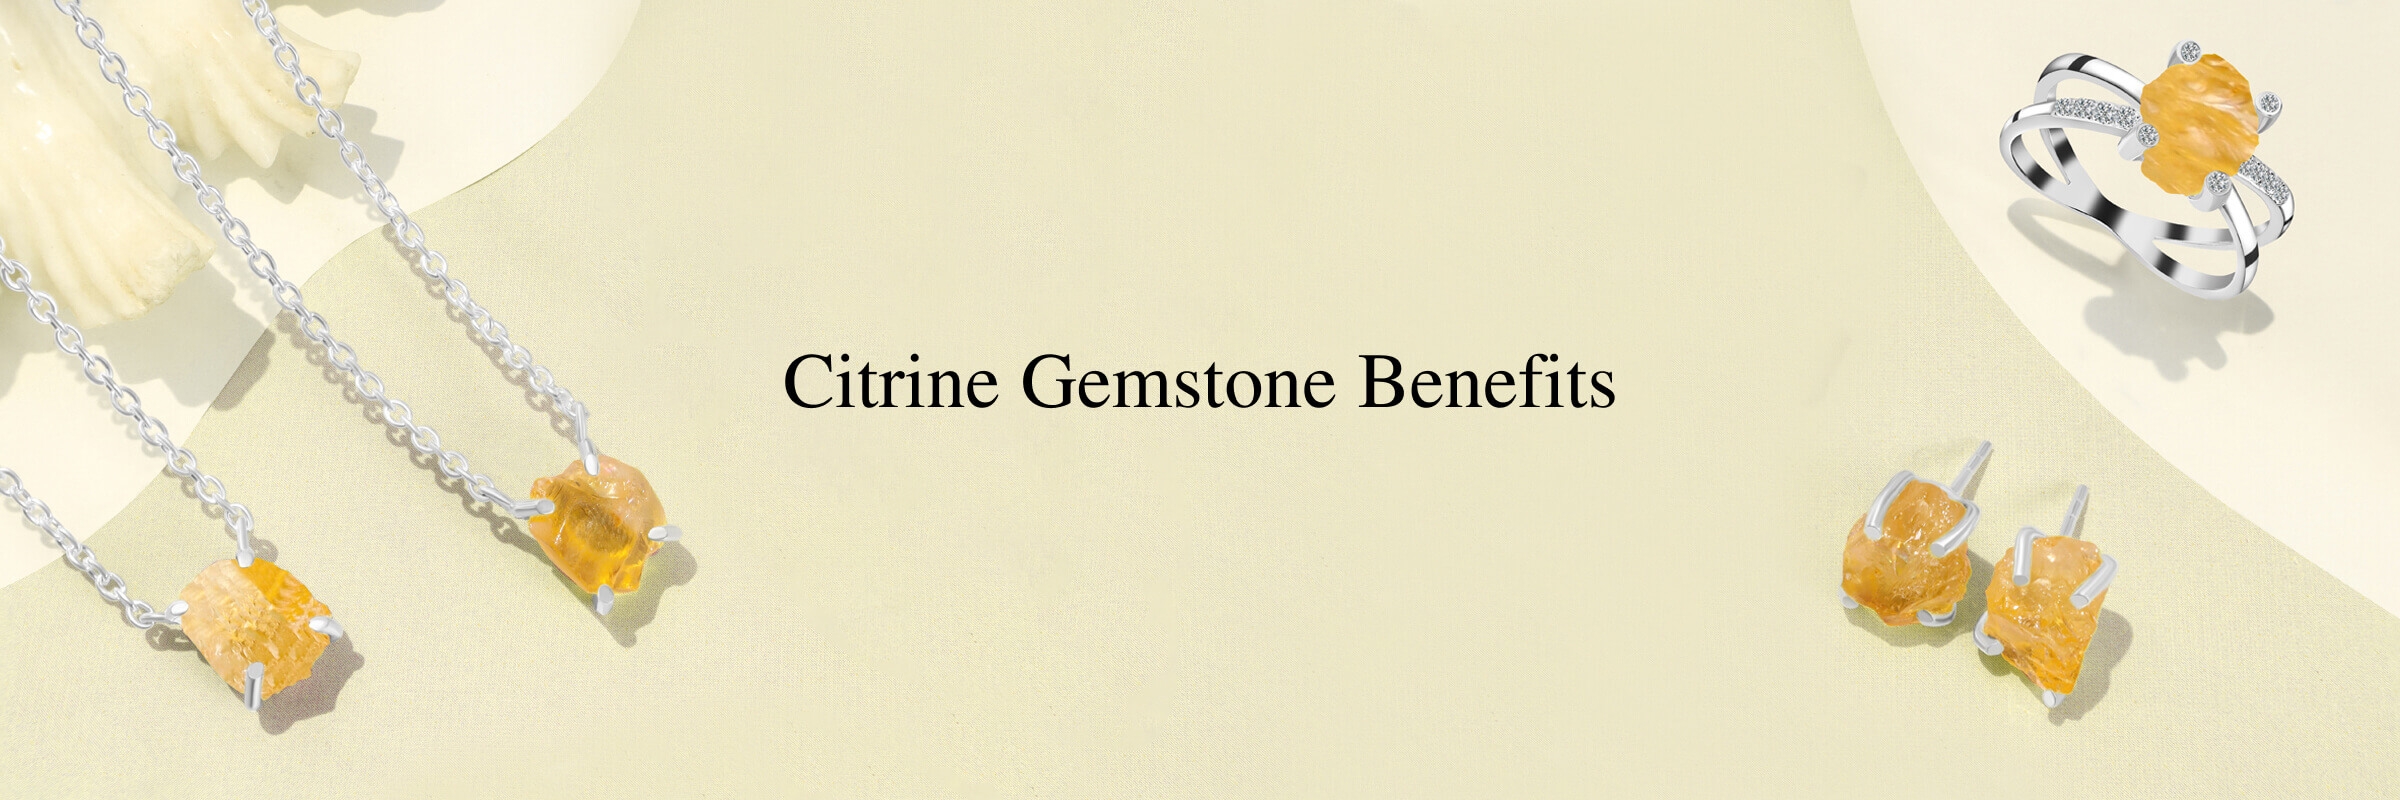 benefits of citrine gemstone jewelry